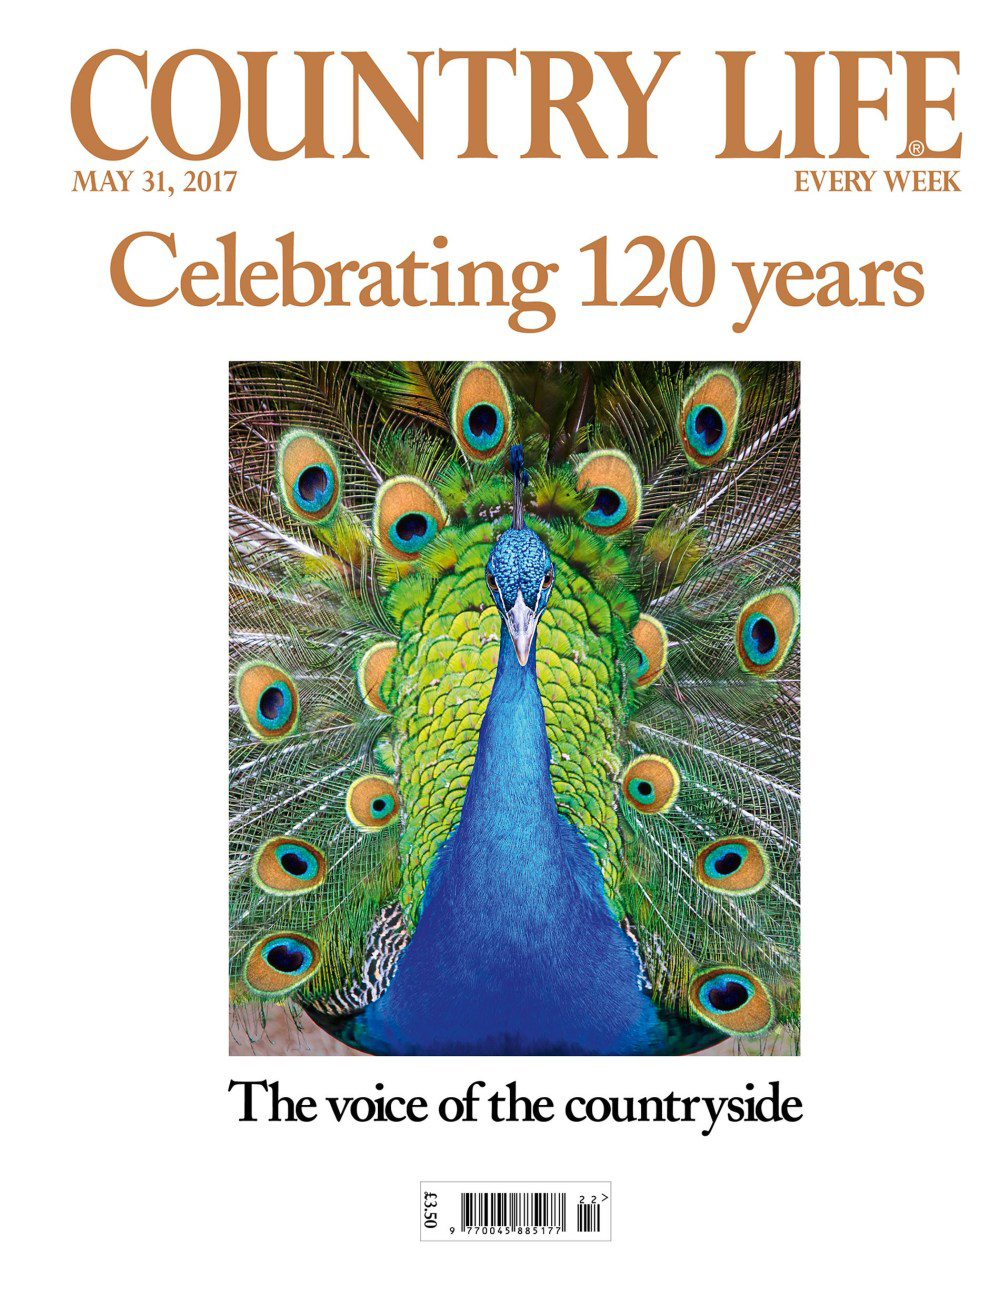 Country Life celebrates 120th anniversary - Fashion & Beauty